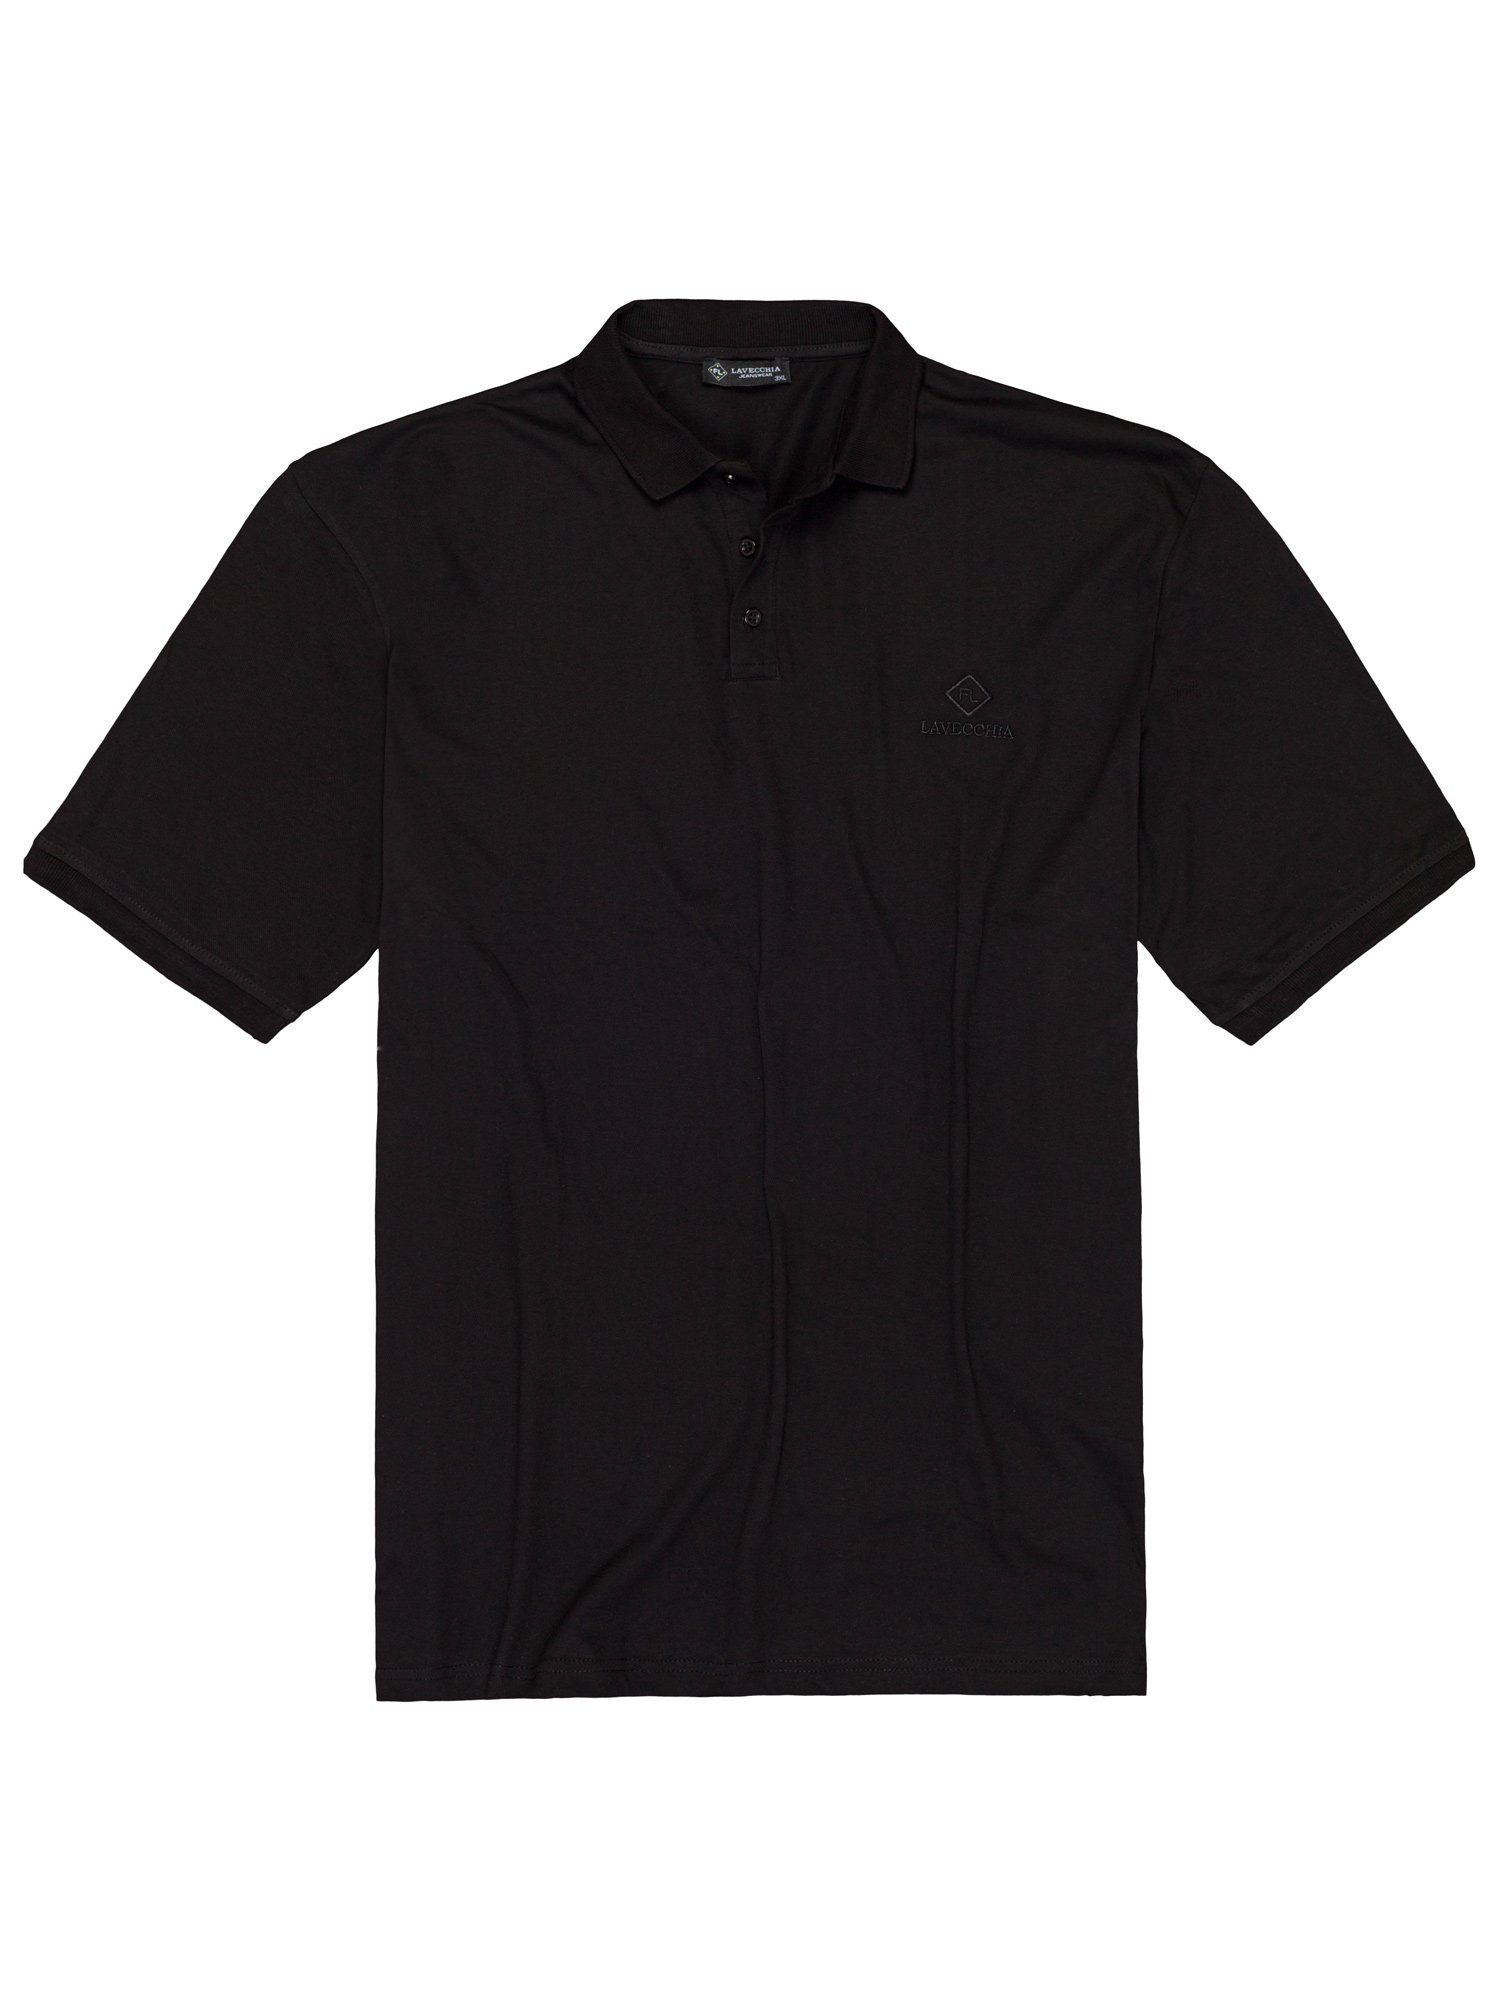 Lavecchia Poloshirt Übergrößen LV-1000 Herren Polo Shirt schwarz